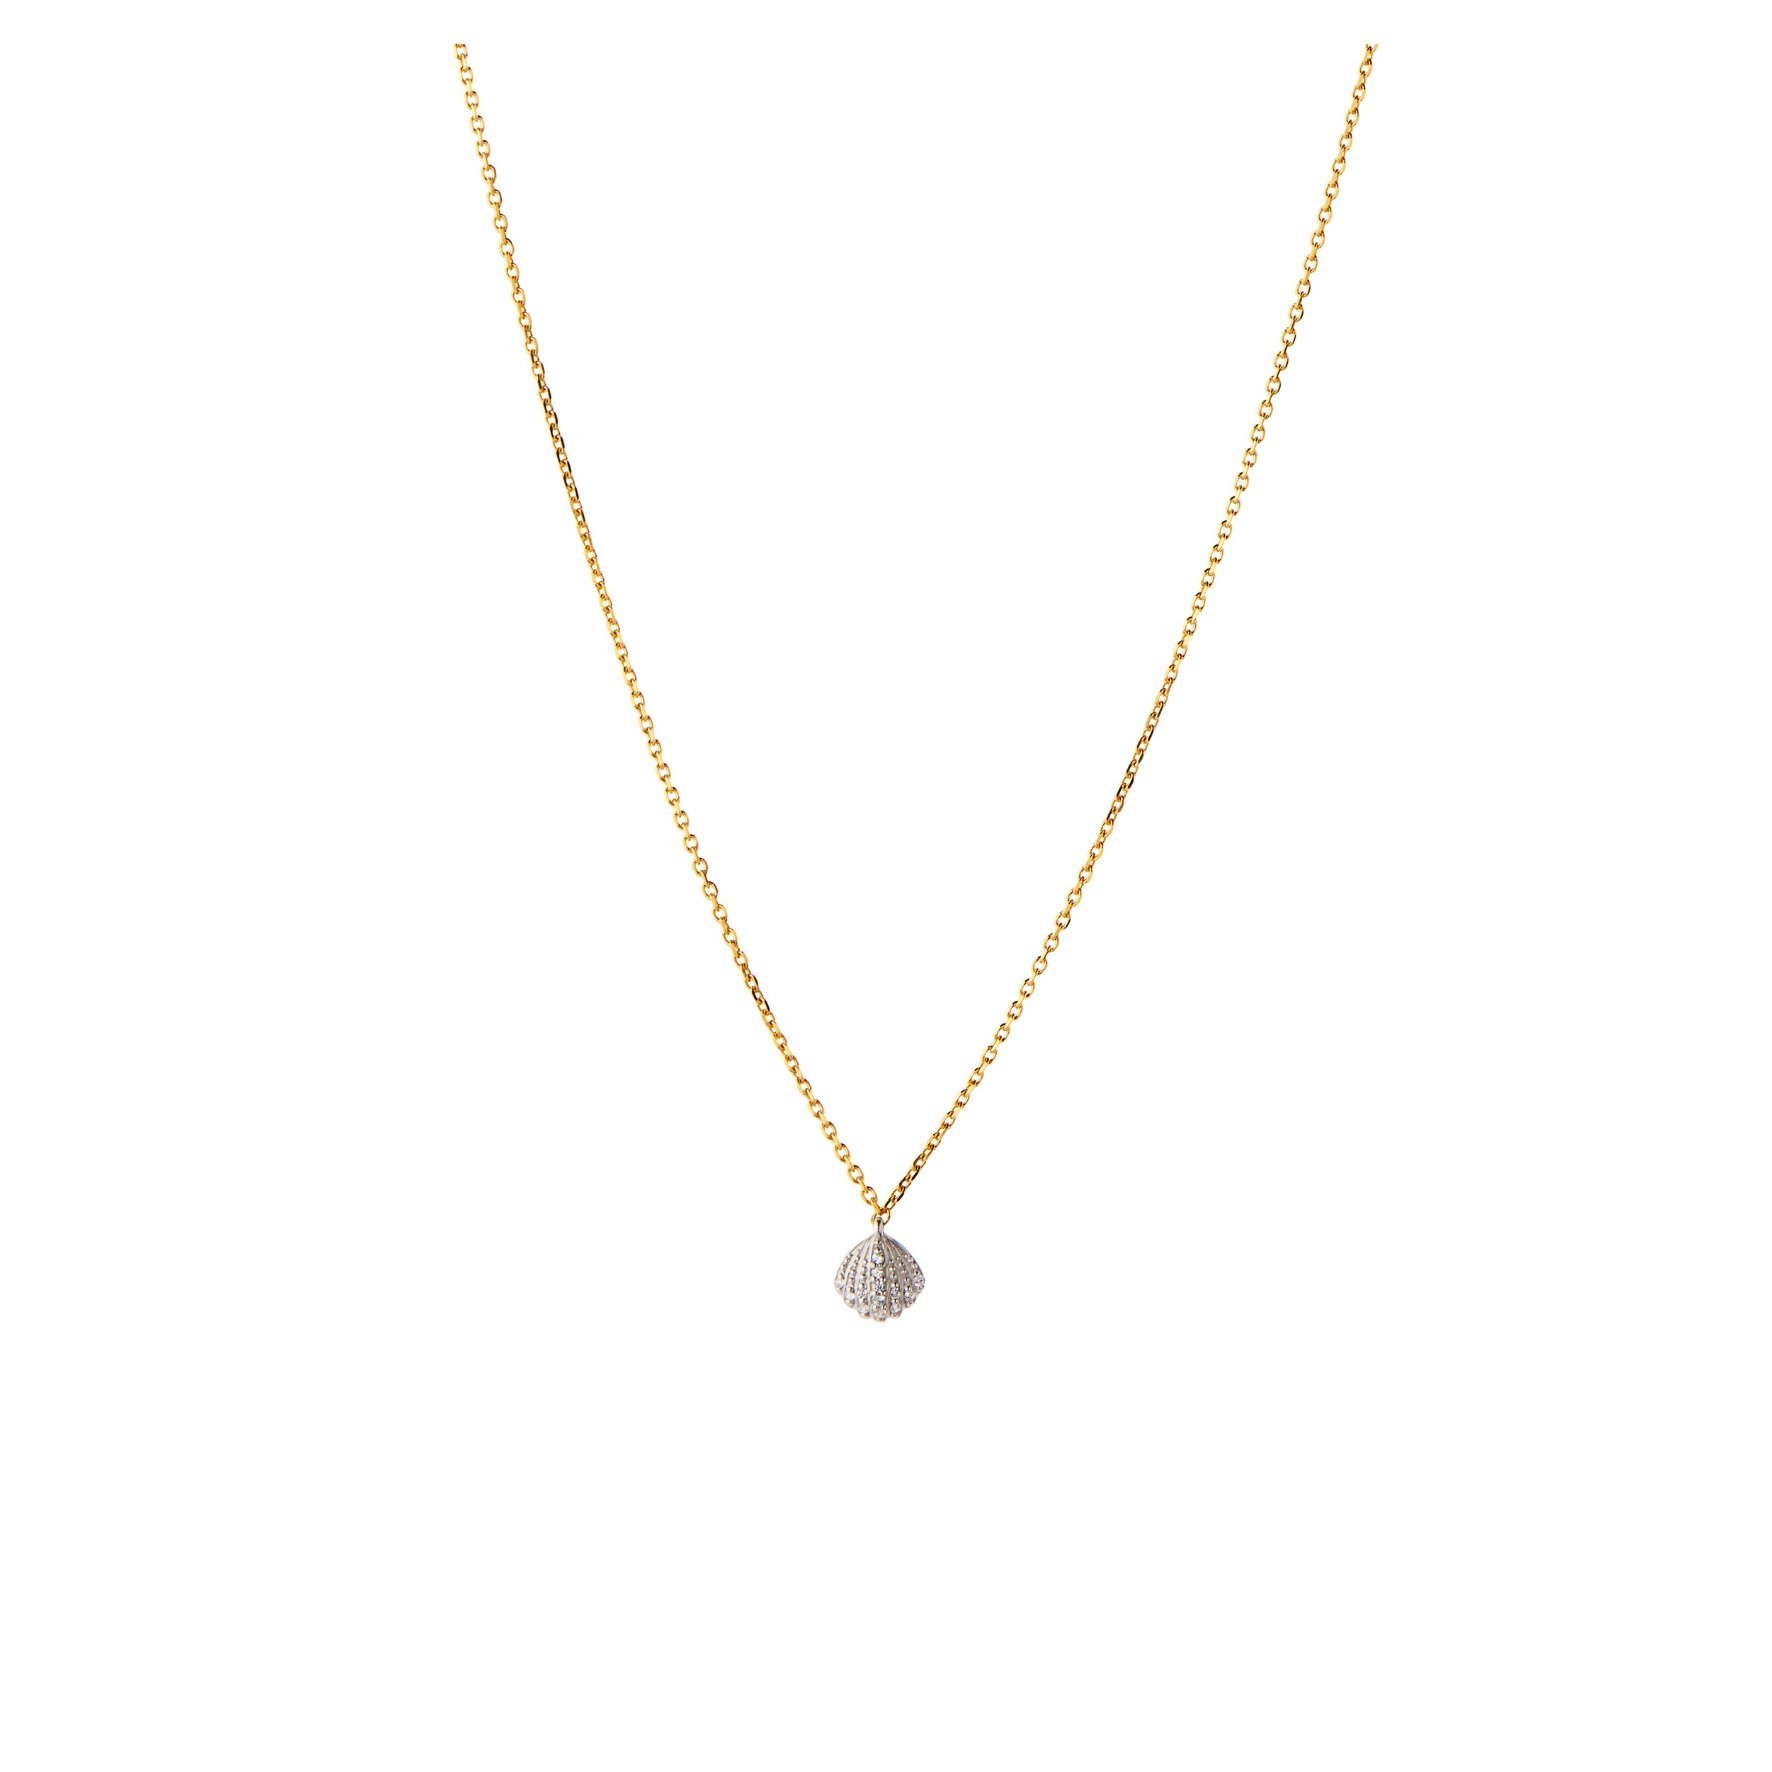 Tres Petit Vintage Shell Necklace fra STINE A Jewelry i Forgyldt-Sølv Sterling 925